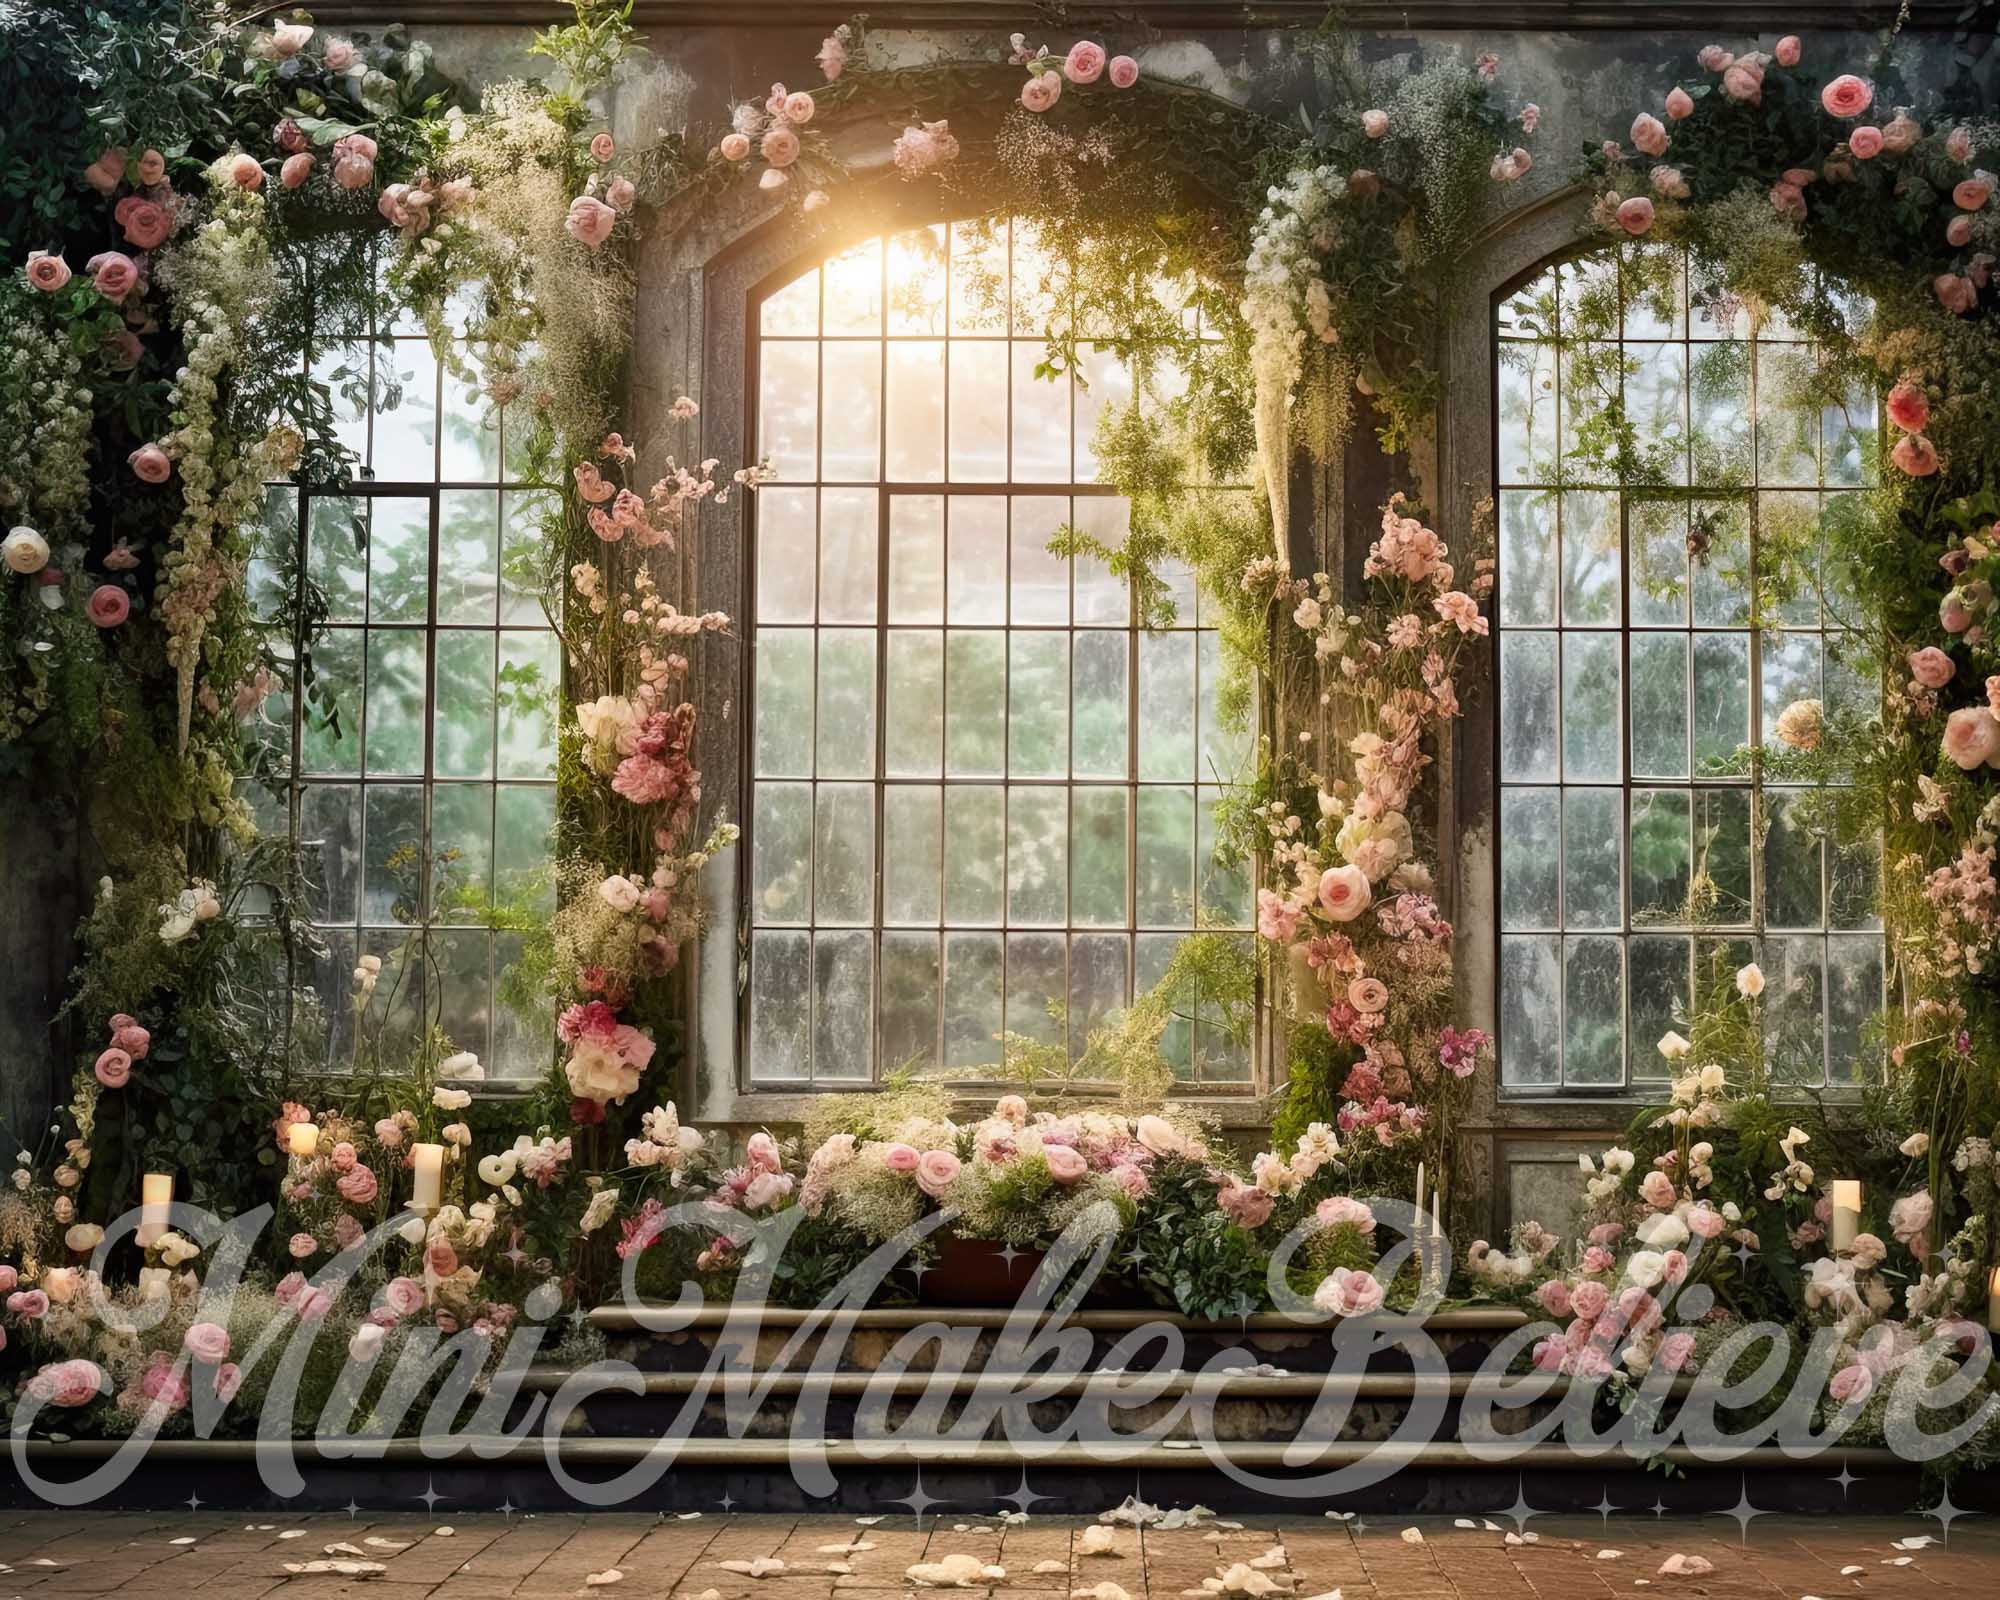 Kate Valentine Spring Wedding Romantic Roses in Arbitrarium Backdrop Designed by Mini MakeBelieve